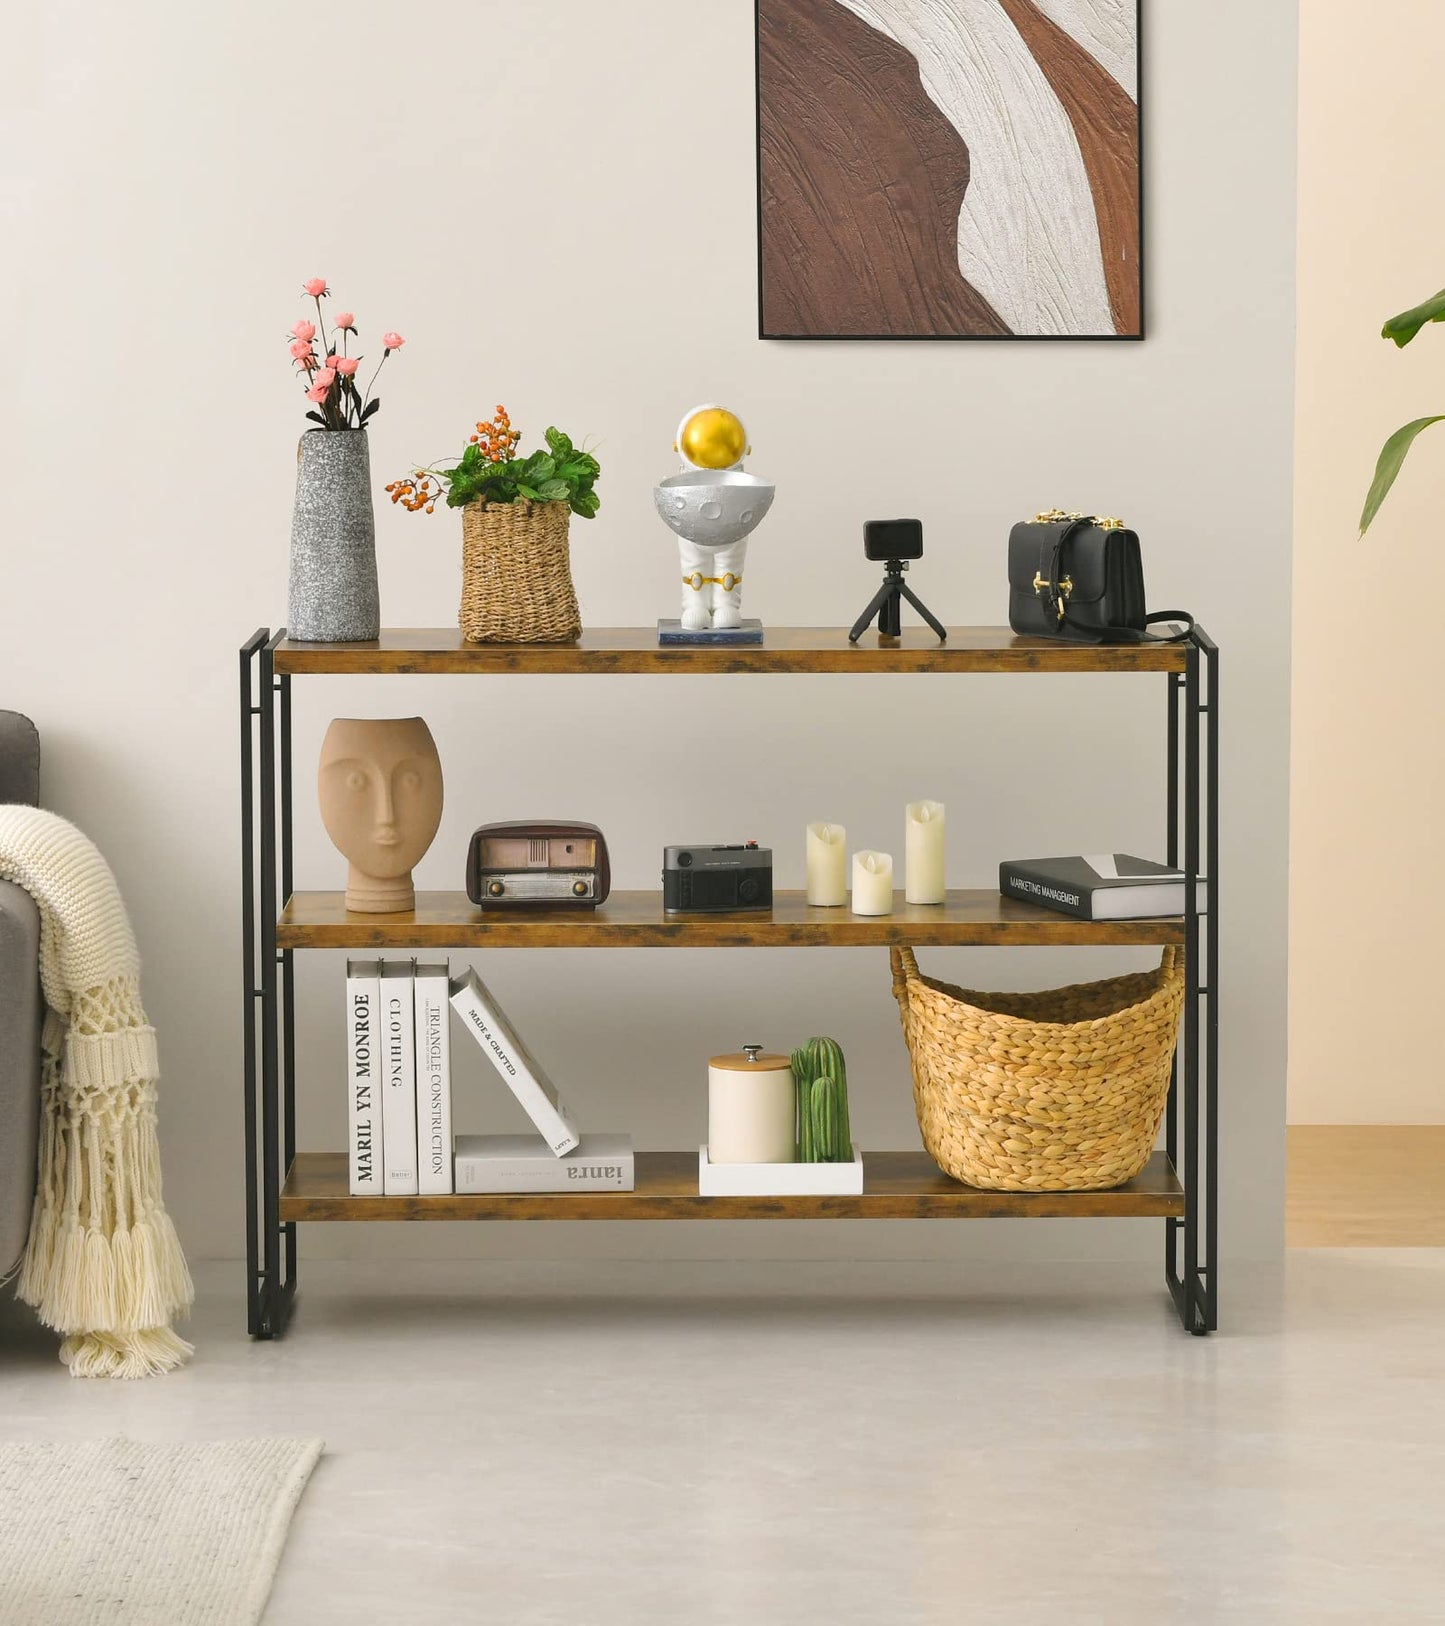 3-Tier Rustic Wood and Metal Industrial Bookshelf for Home Office, Bedroom, Kitchen, Bathroom - 47in